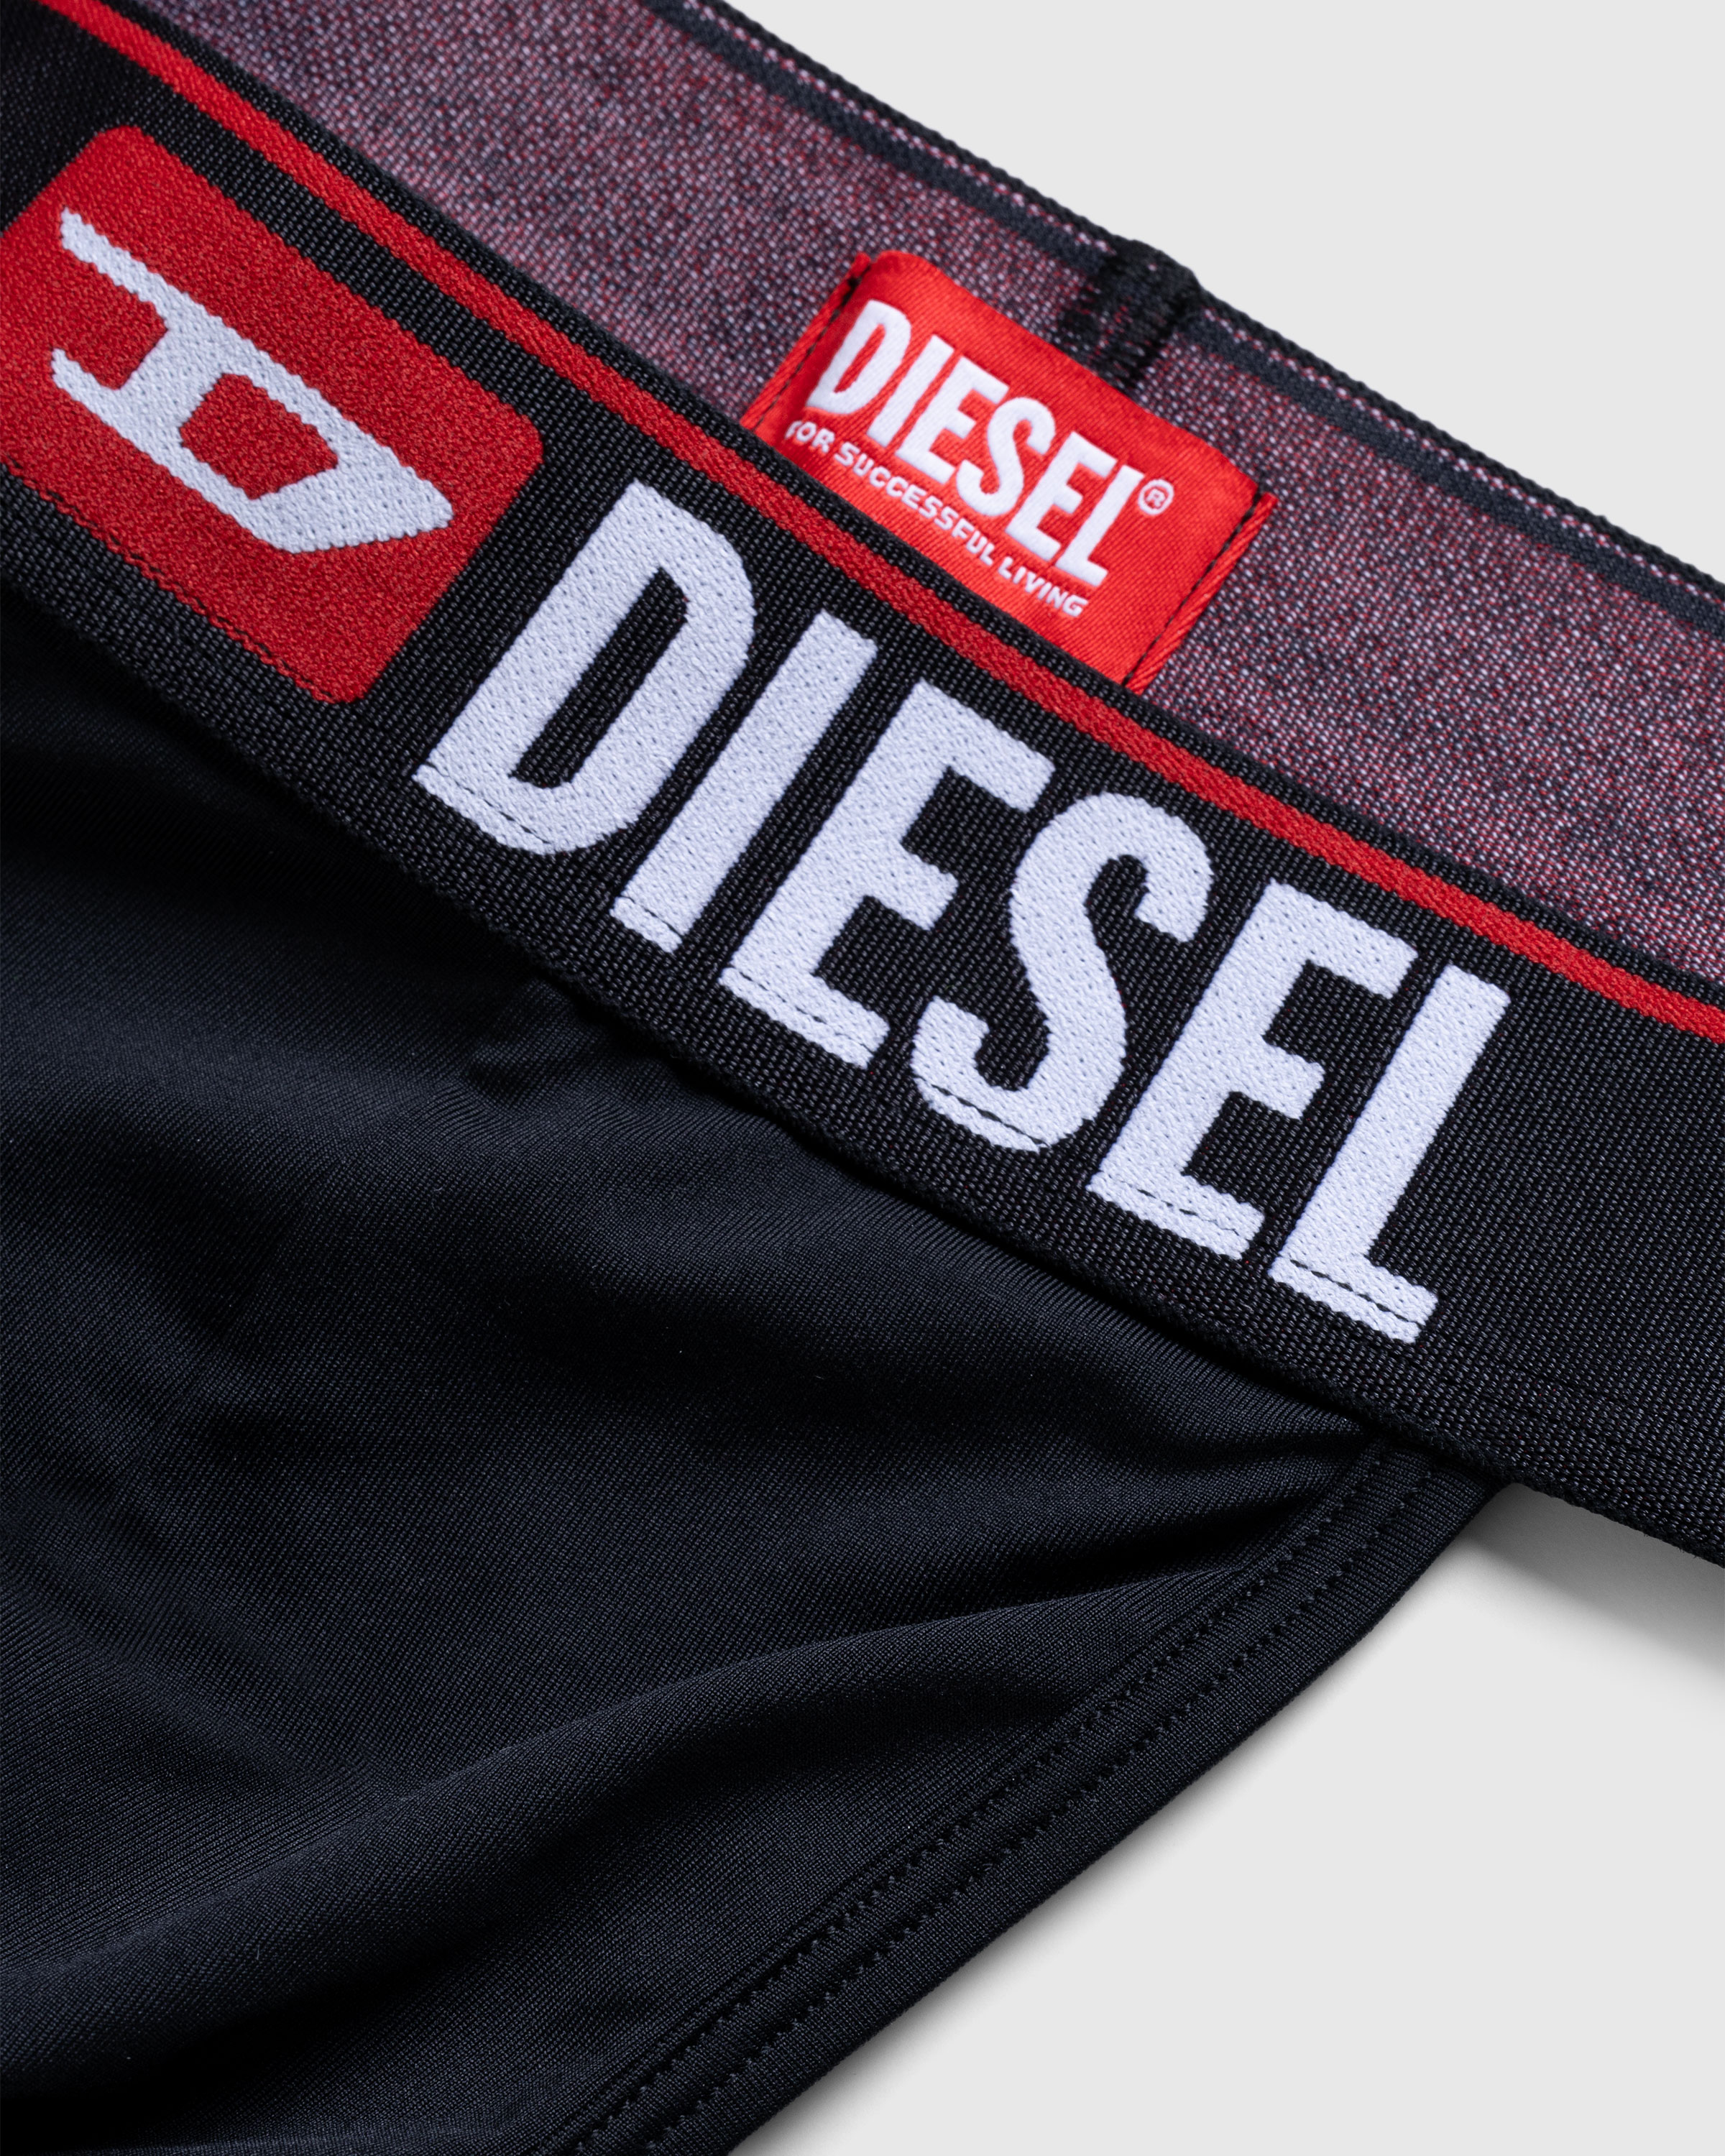 Diesel – Umbr-Jocky Black - Underwear & Loungewear - Black - Image 3